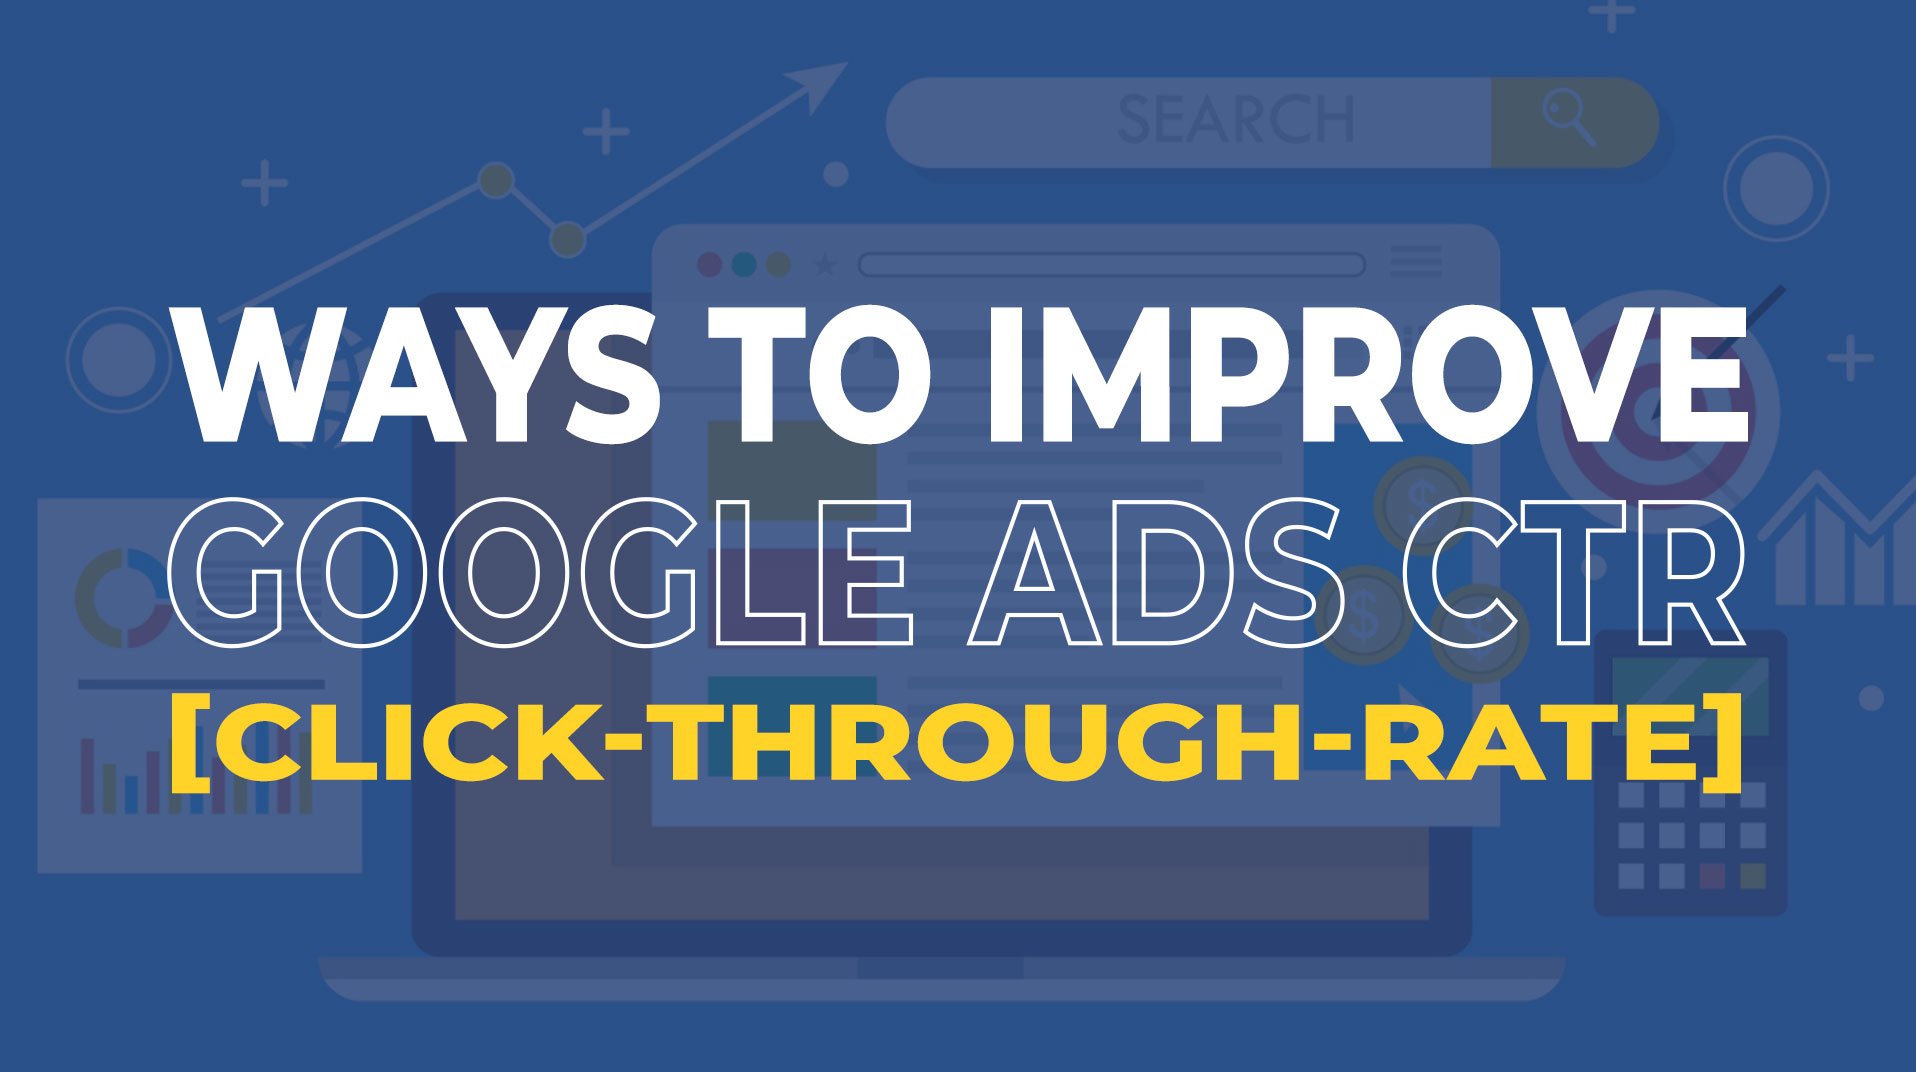 9 Strategies to Improve Google Ads CTR